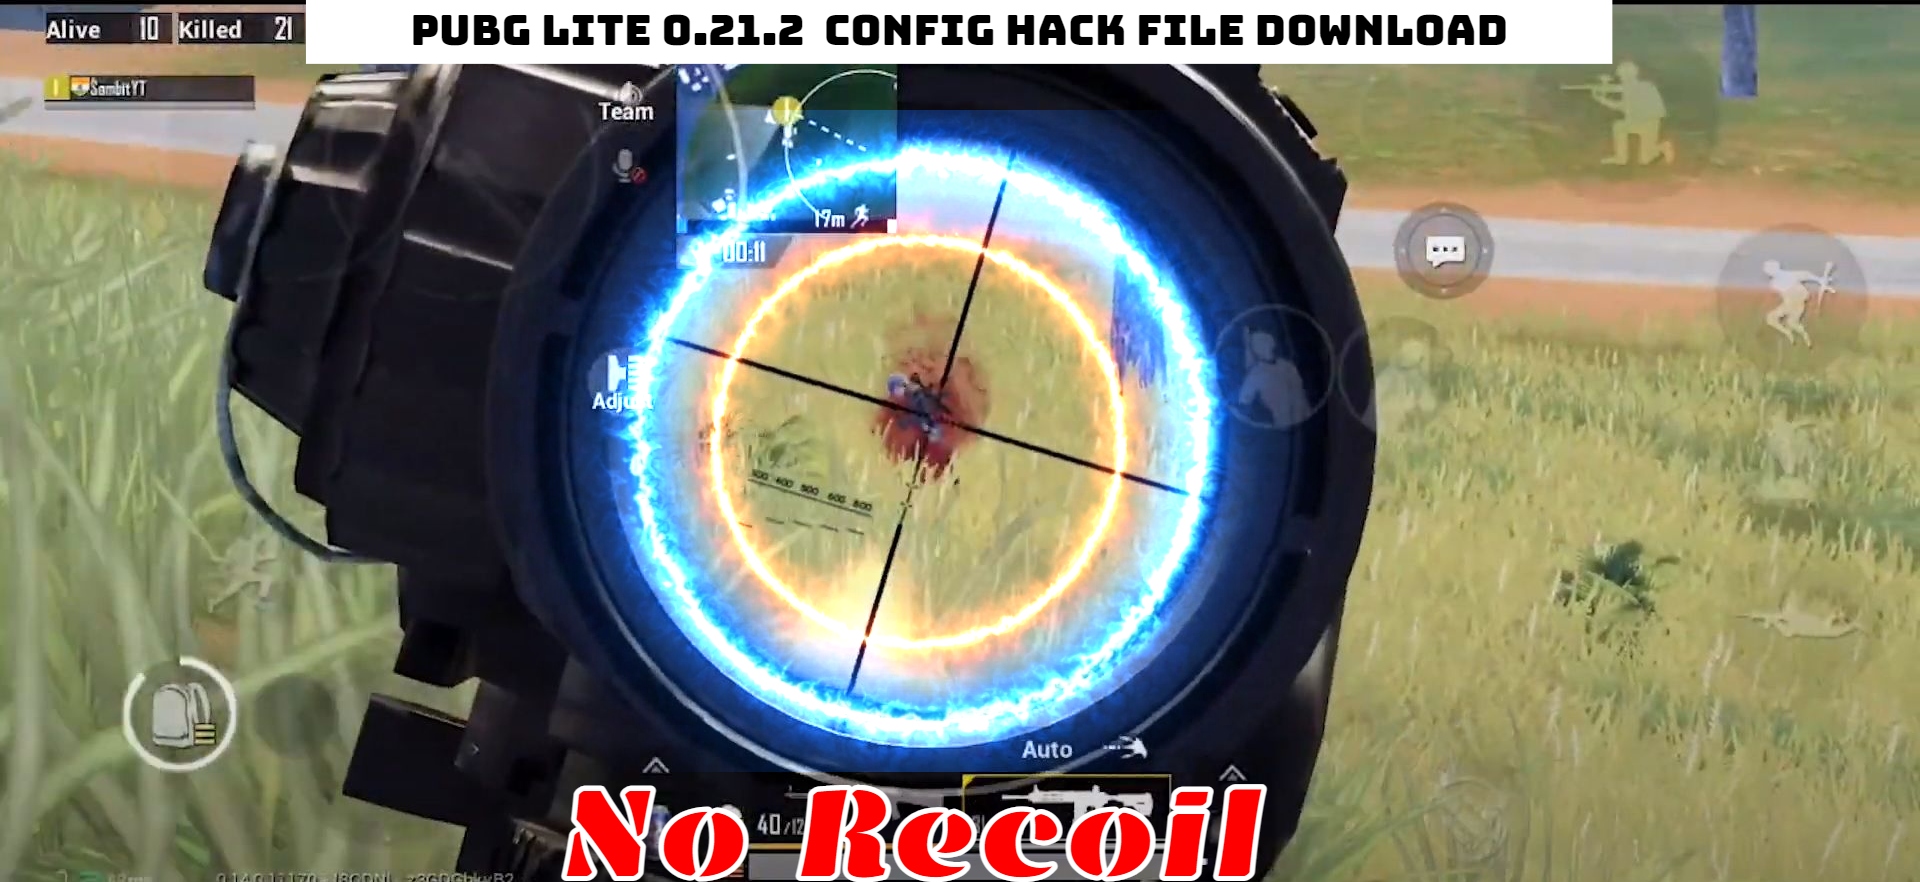 Pubg Lite 0.21.2 no recoil config hack file download